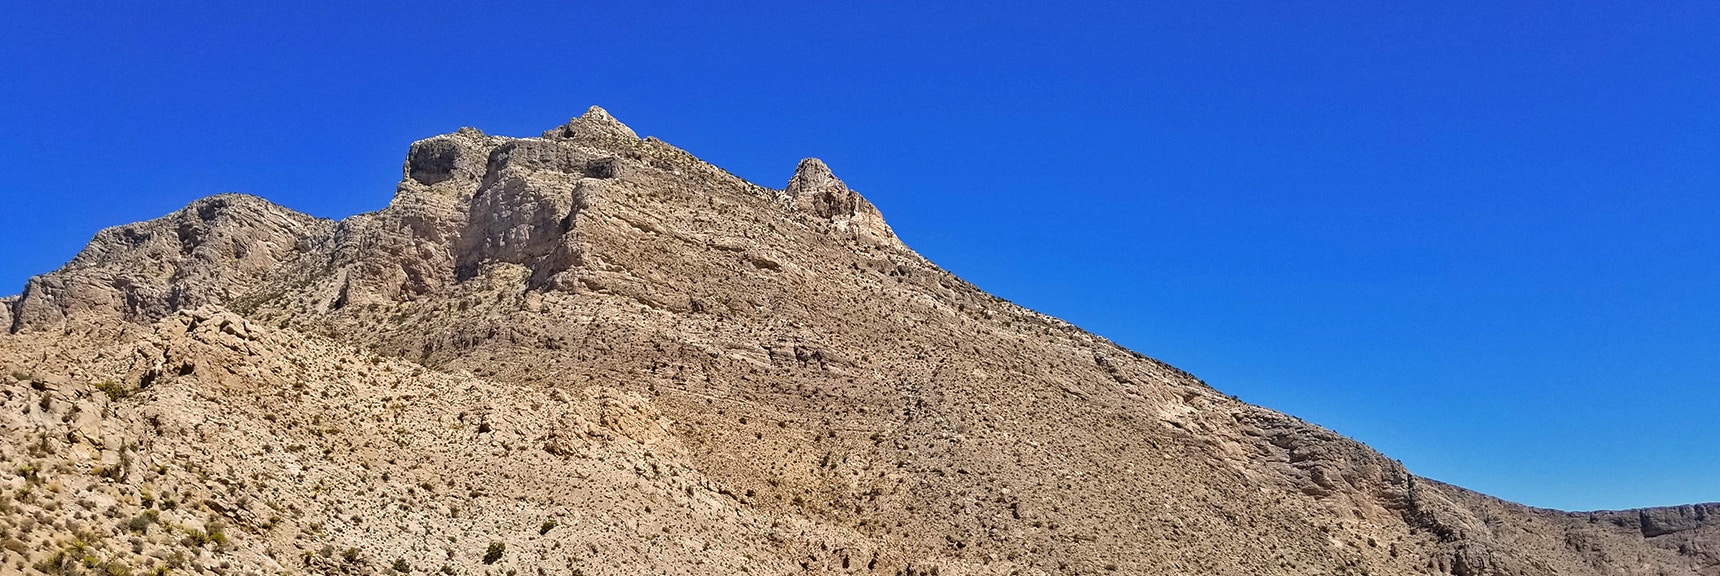 South side of Damsel Peak from an Adjoining Ridge | Damsel Peak Southern Approach | Calico Basin, Nevada